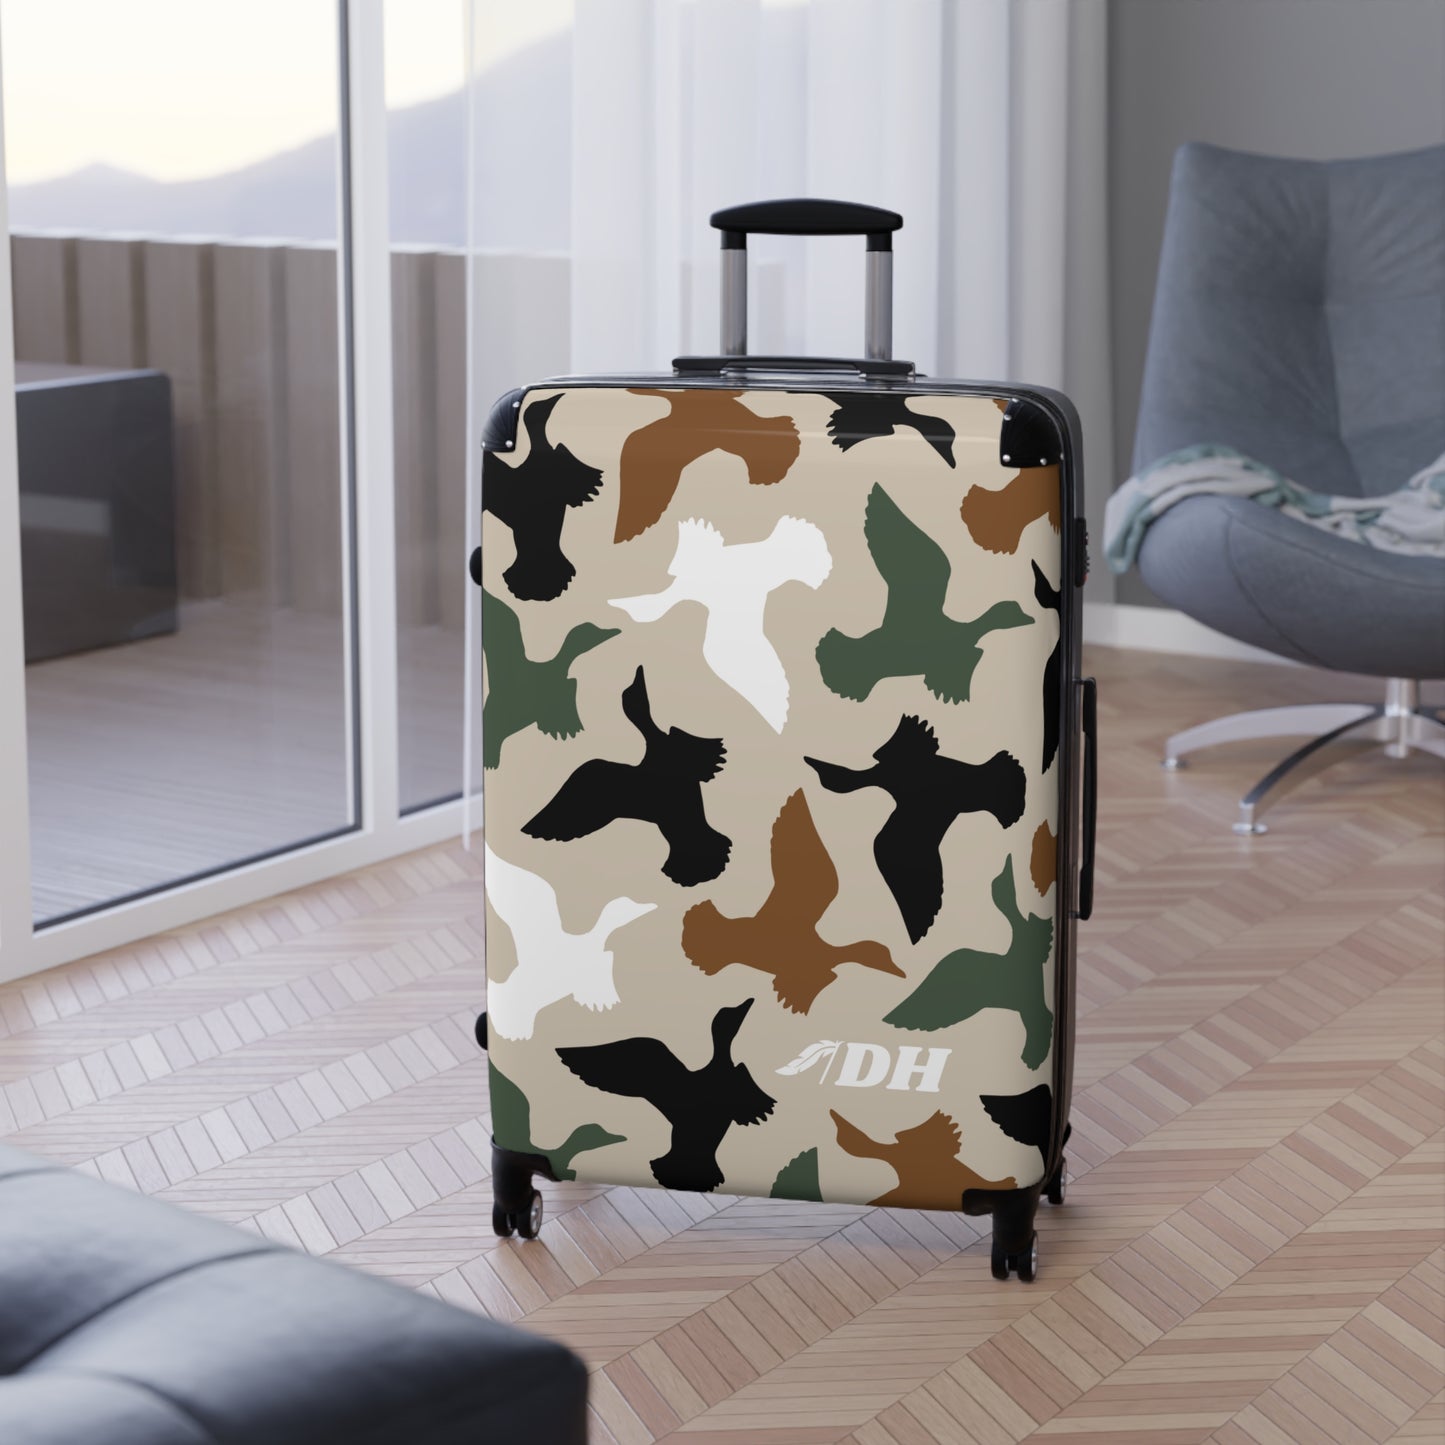 DH FLIGHT Luggage in MARSH (Small, Medium & Large)